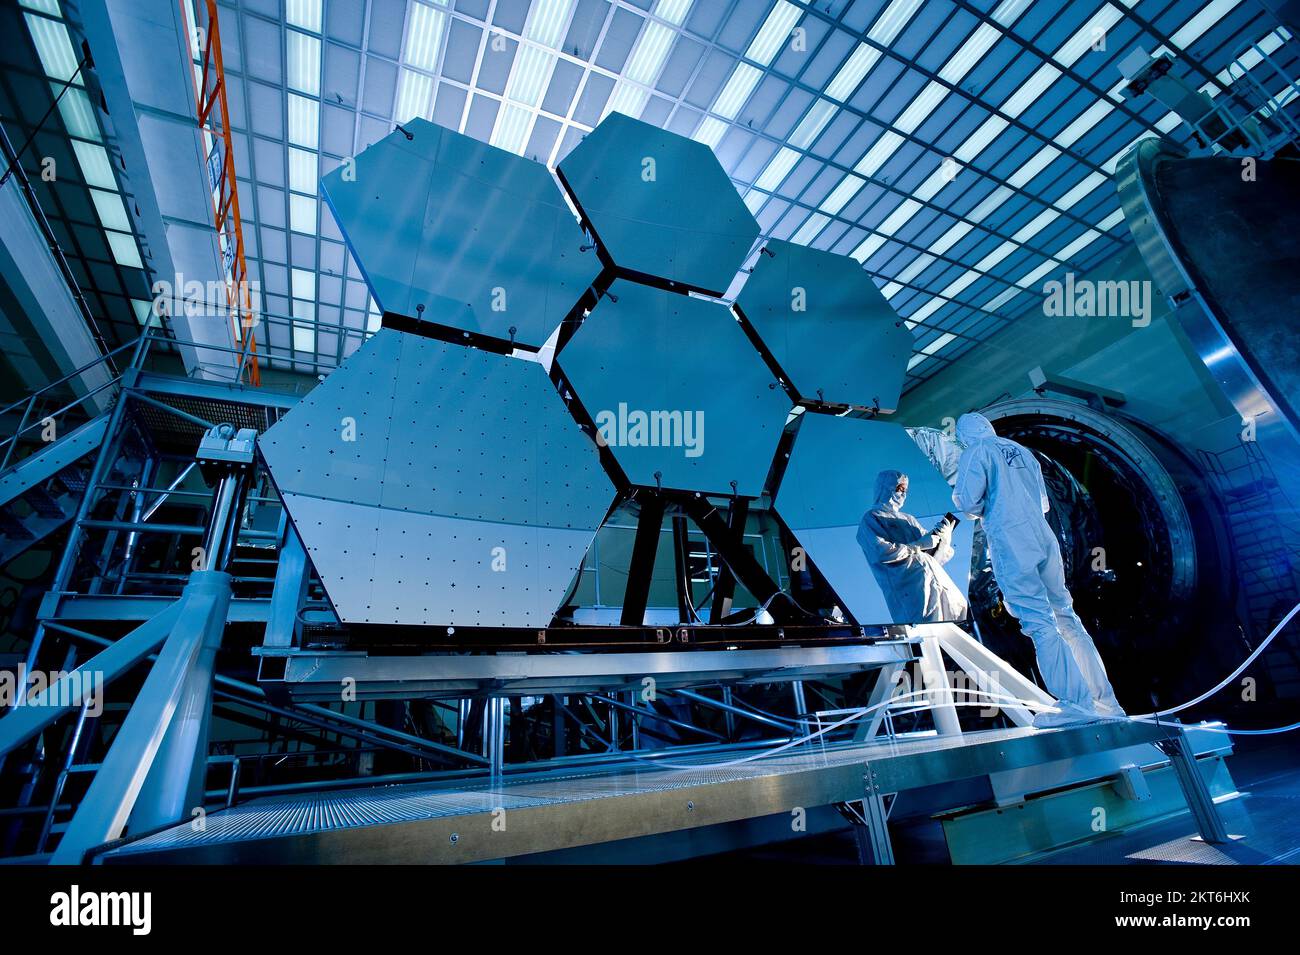 The James Webb Telescope under construction / Nasa Scientists Stock Photo